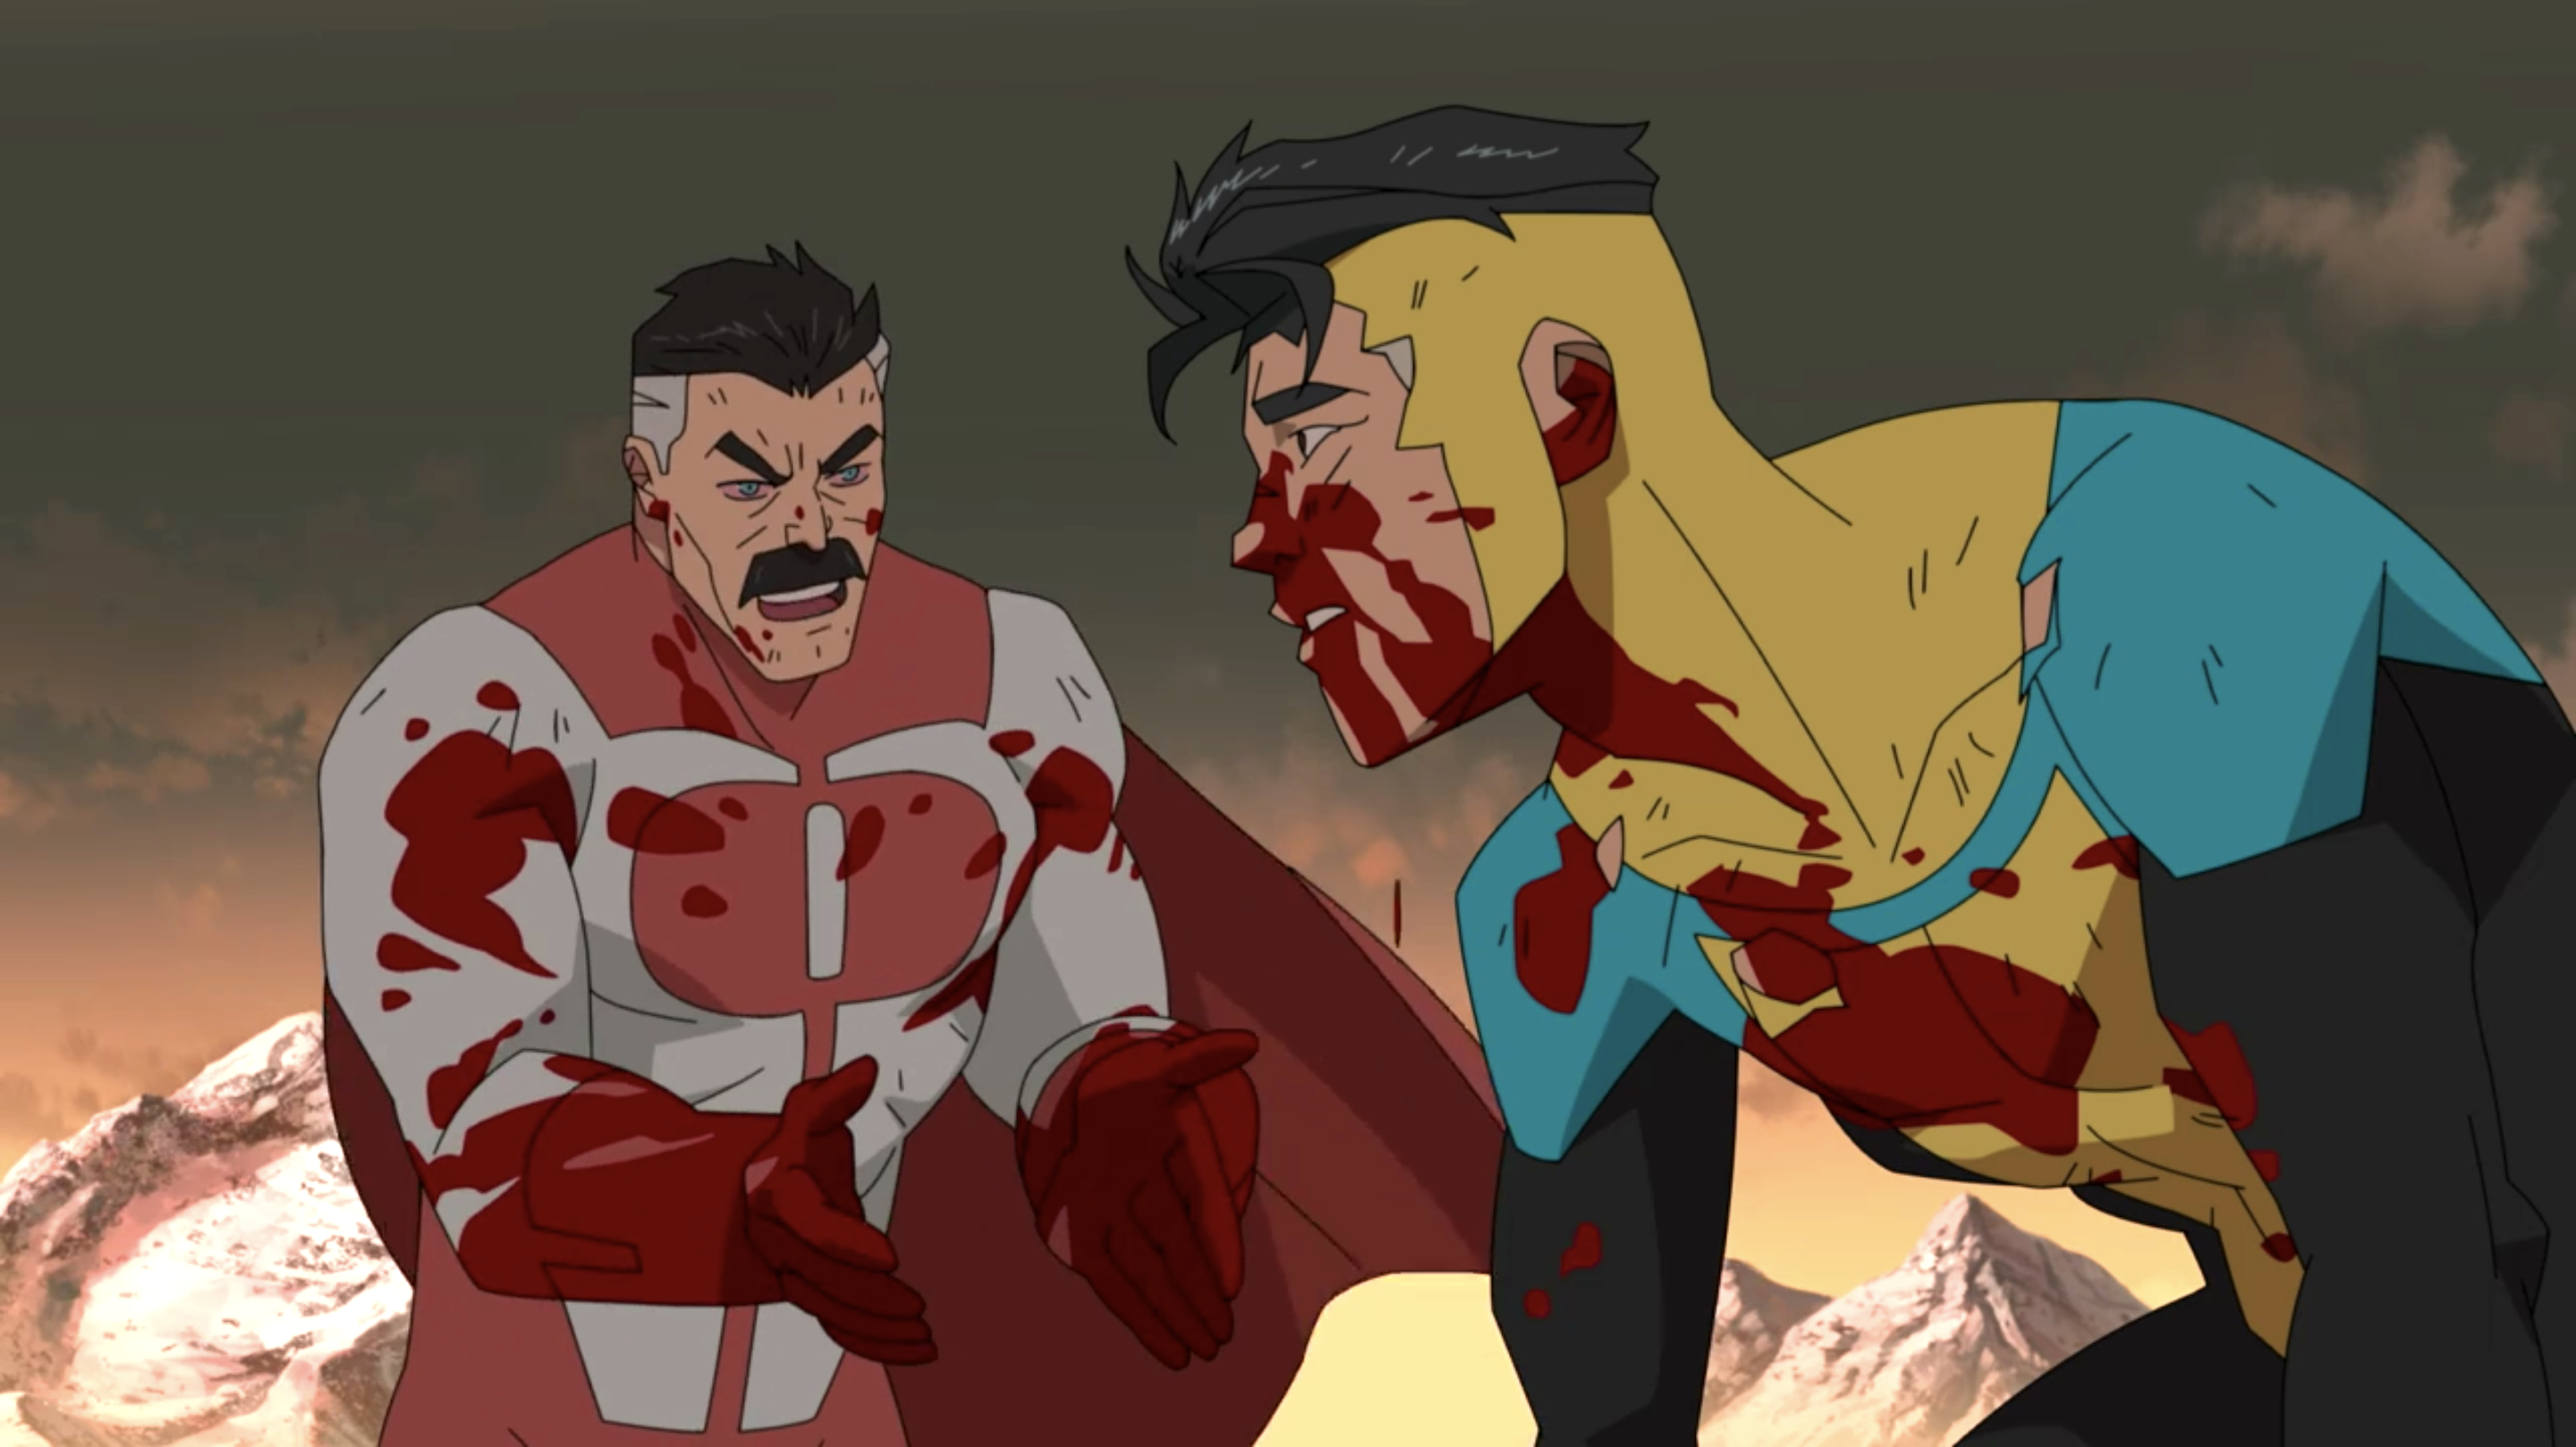 Invincible season 2 doubles down on superhero violence - Polygon